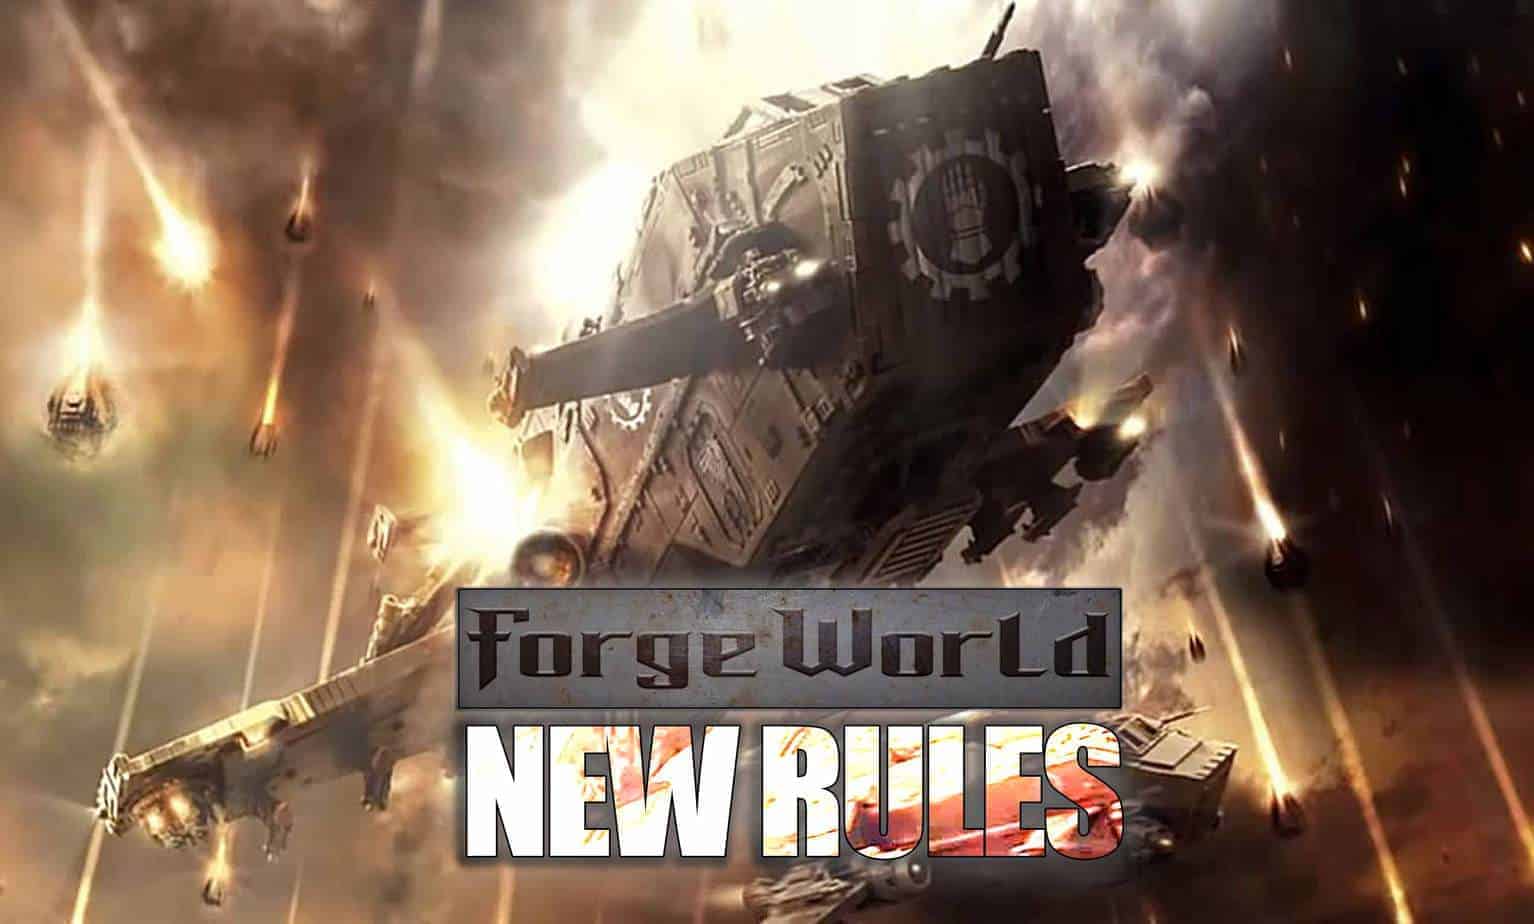 Forge world new kyzagan speeder new release